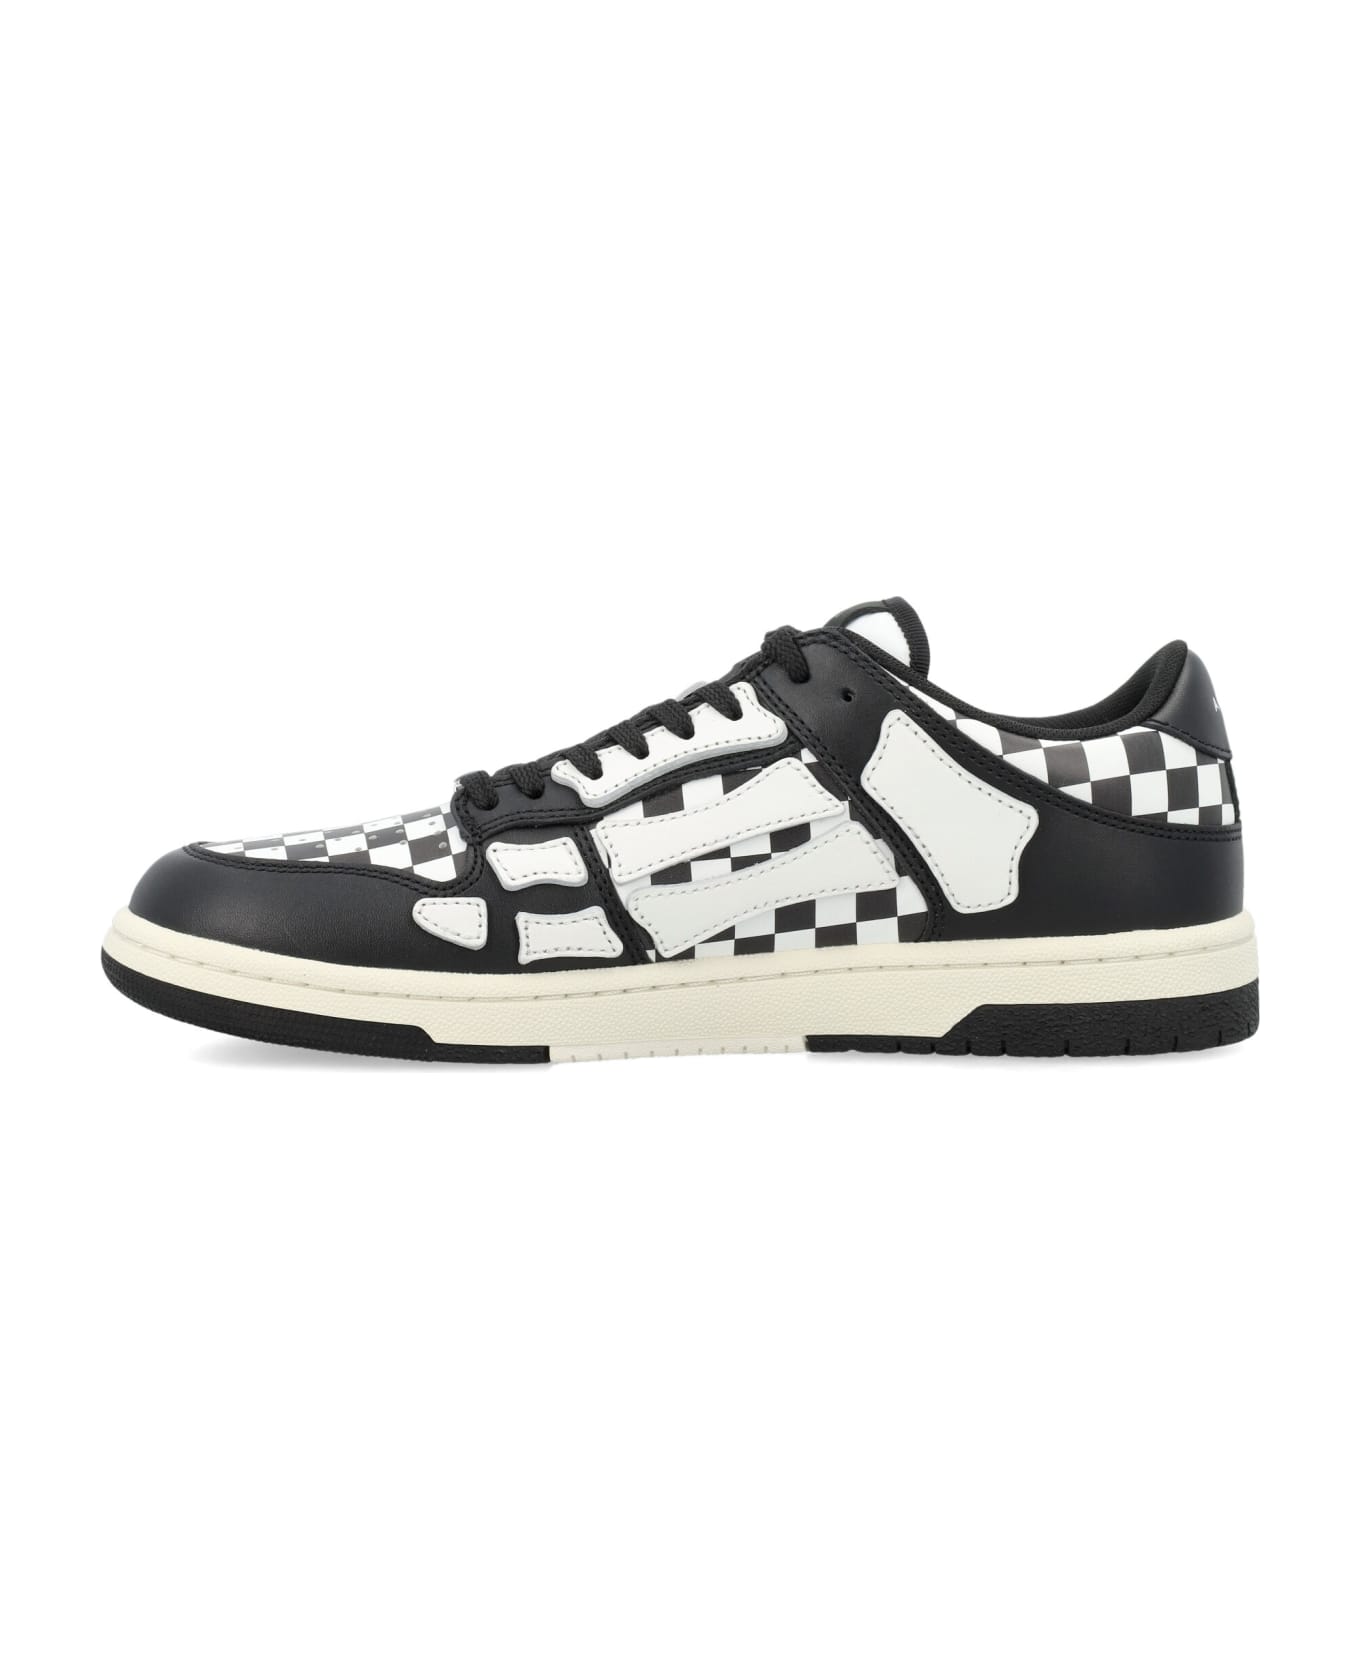 AMIRI Checkered Skel Top Low Sneakers - BLACK WHITE